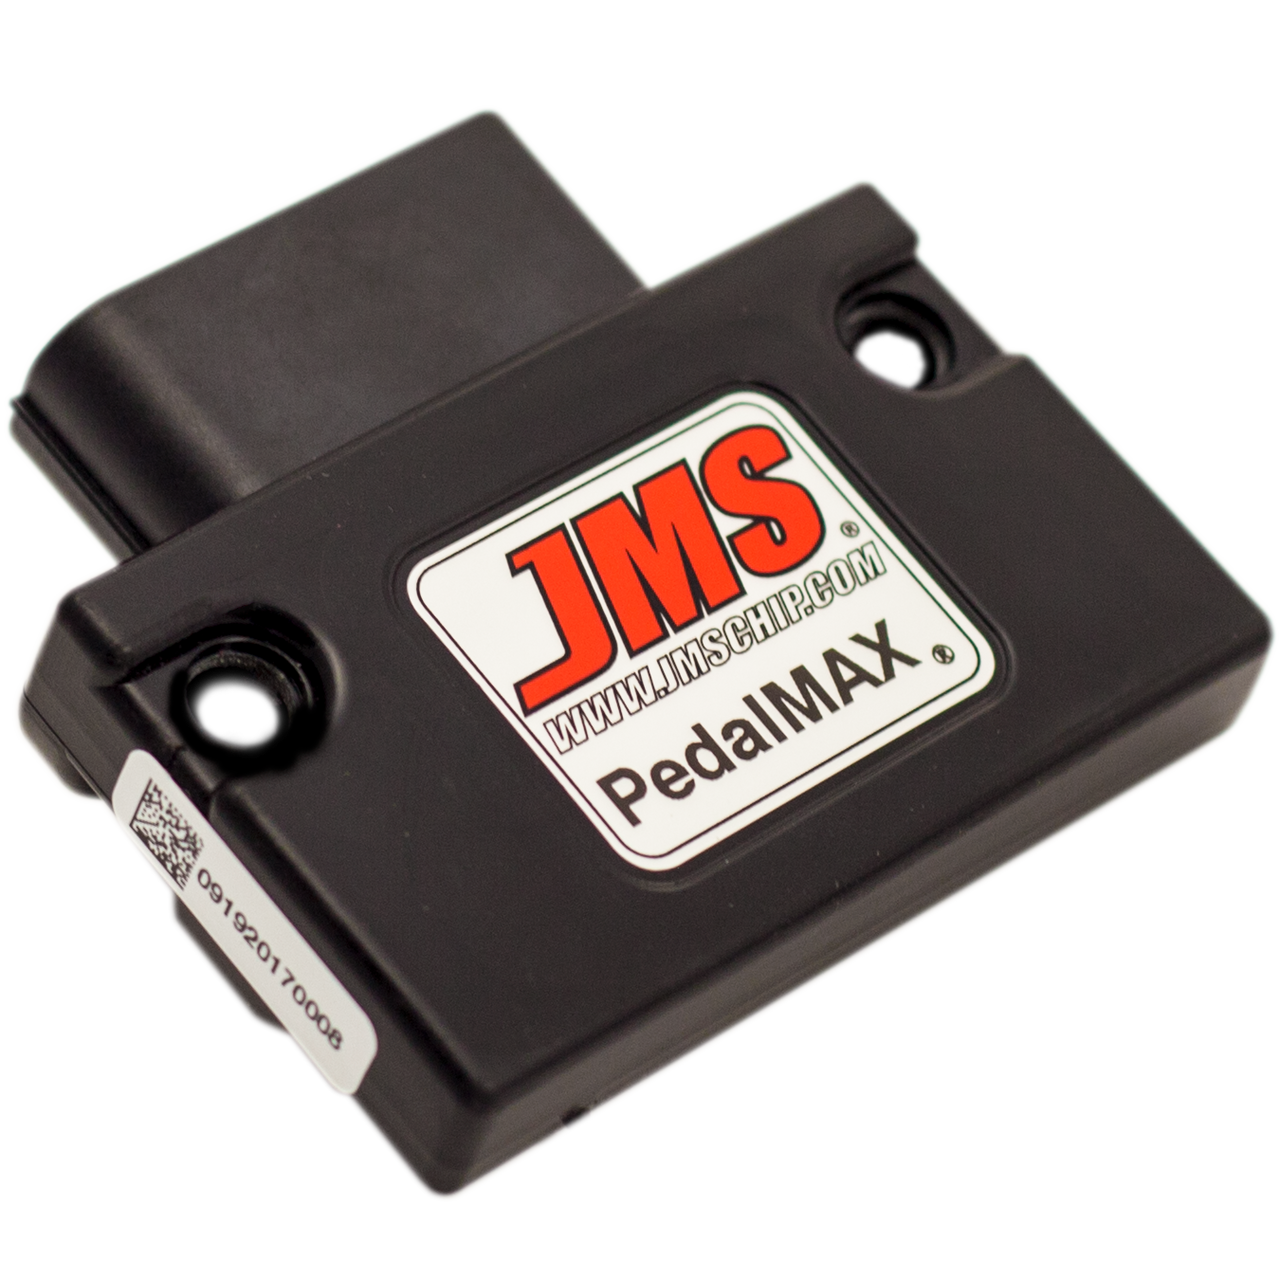 JMS Pedalmax Drive Wire Throttle Enhancement Device Plug & Play PX1015GM